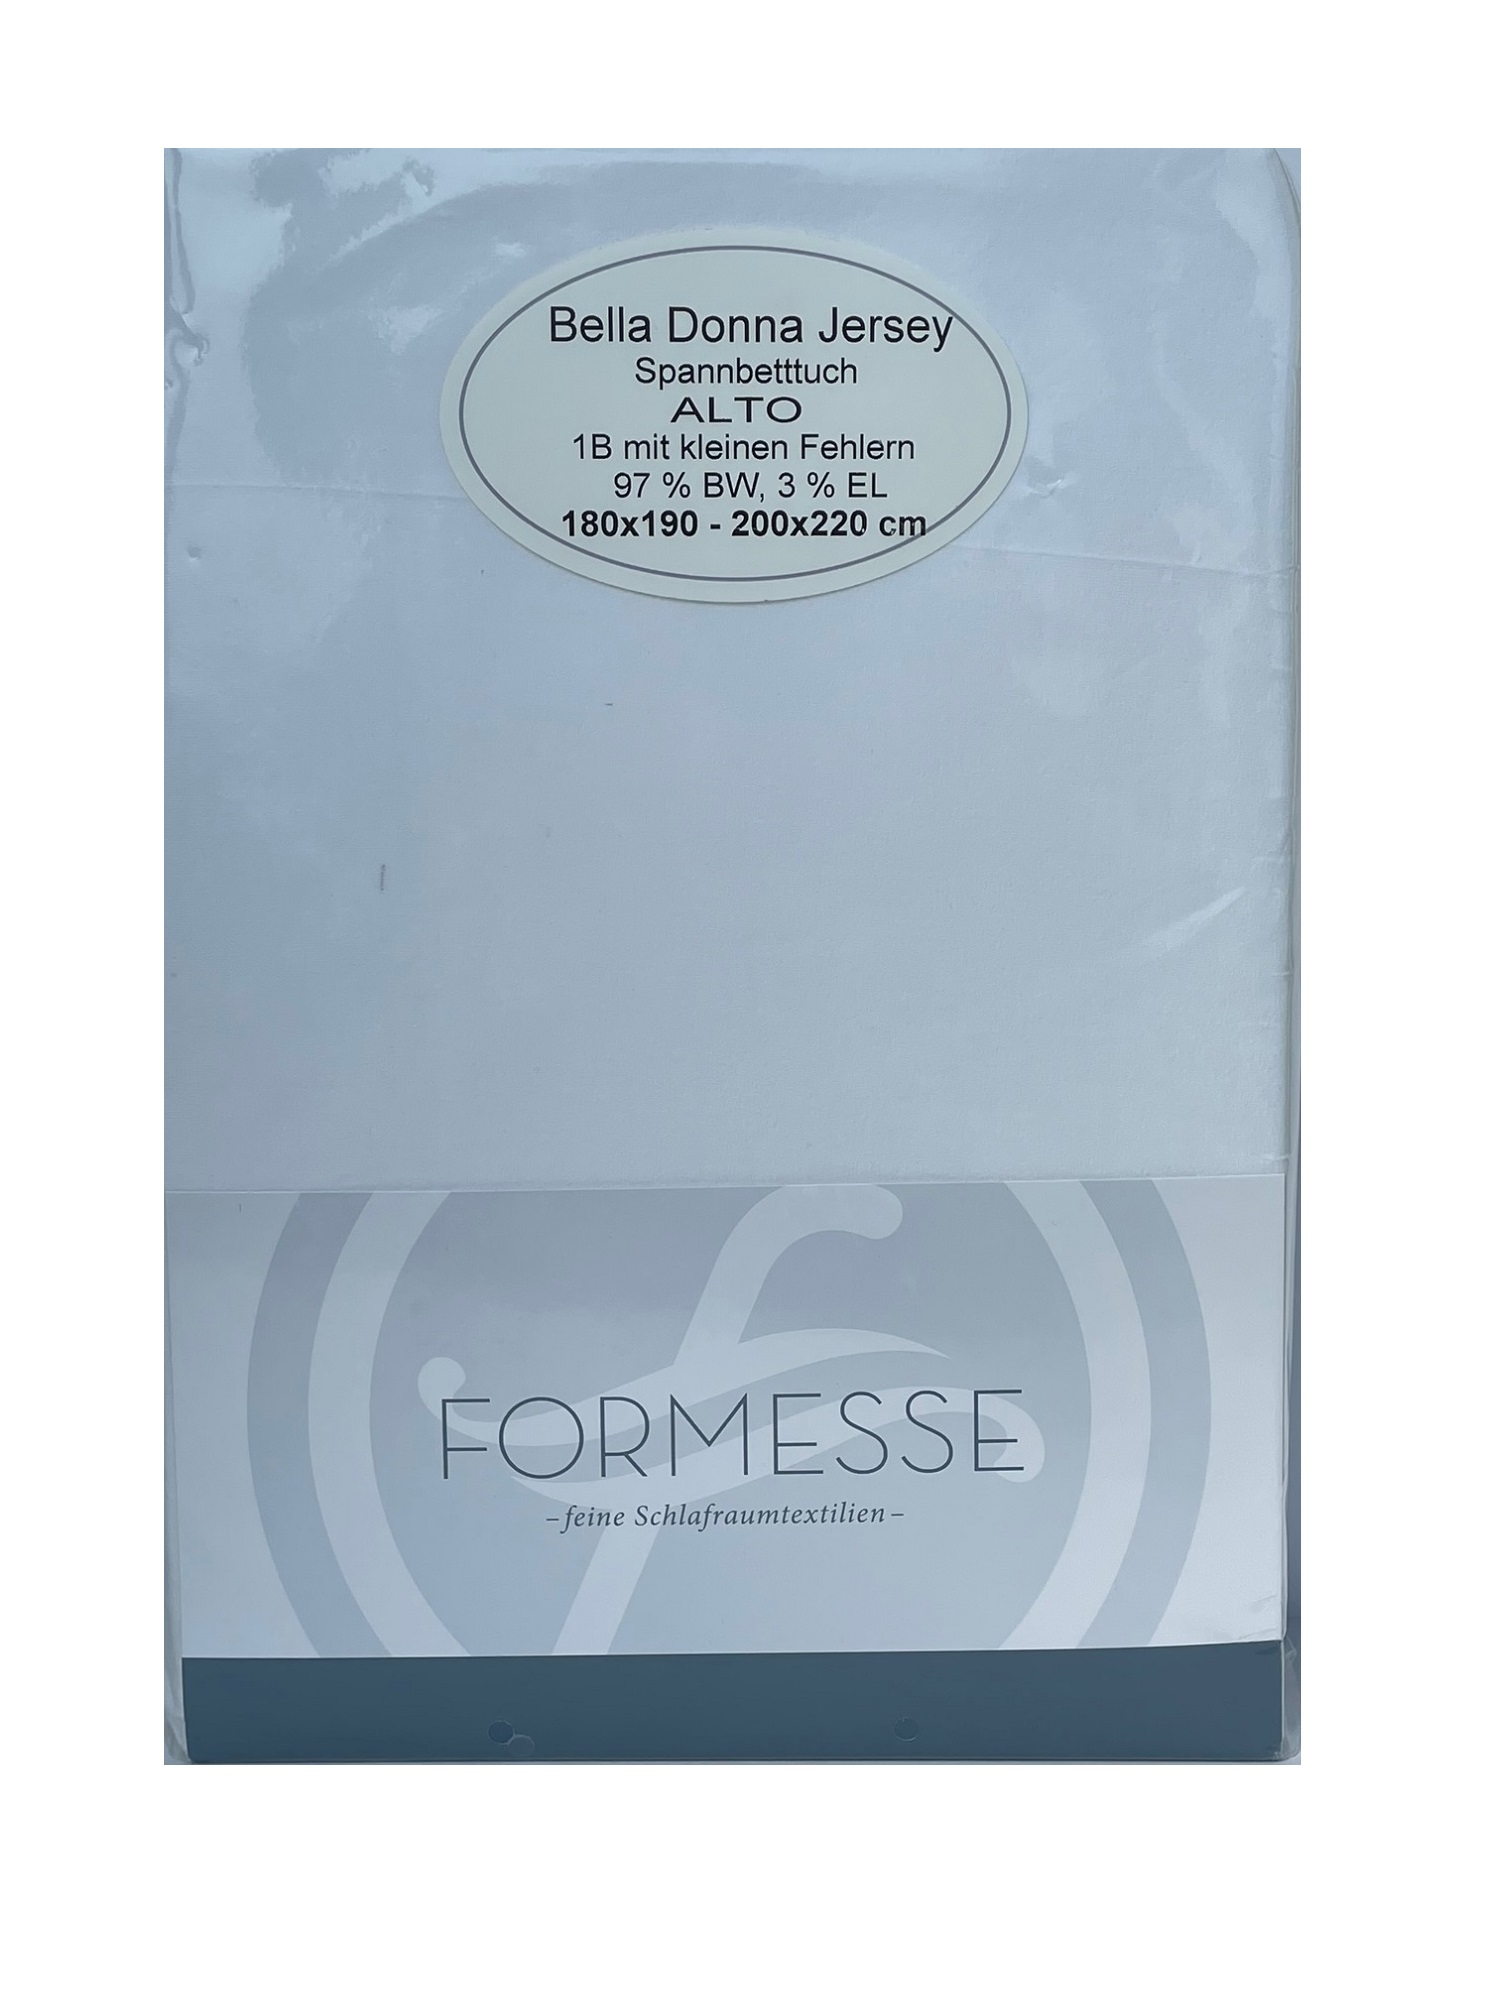 Bella Donna Jersey Alto Boxspring 1B Spannbetttuch 180x190x200x220 cm Weiss 9000